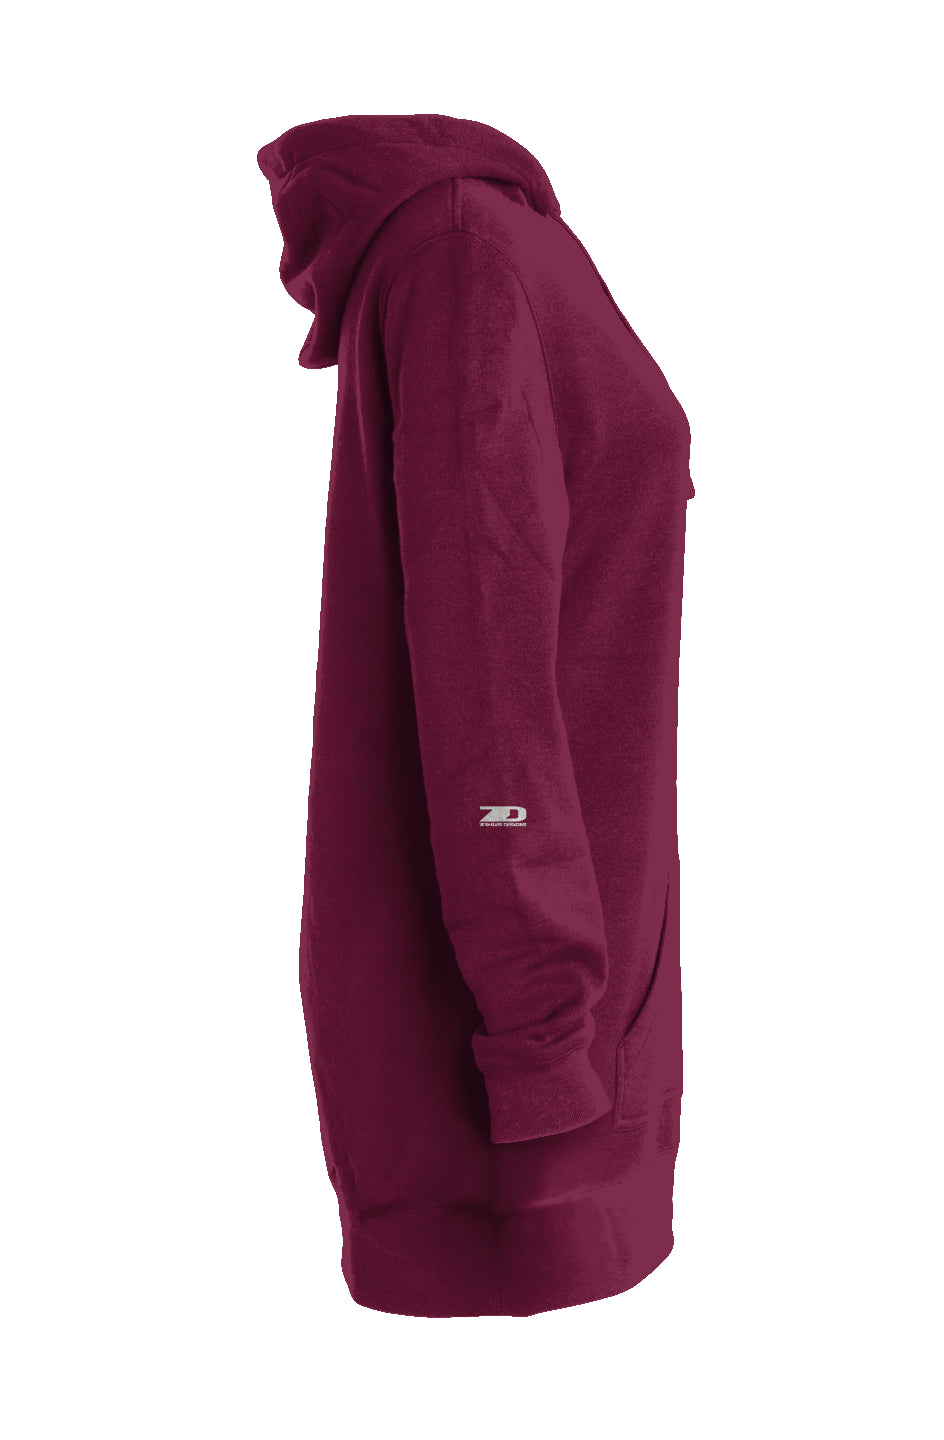 Hooded Sweatshirt Dress by Zawles Designs